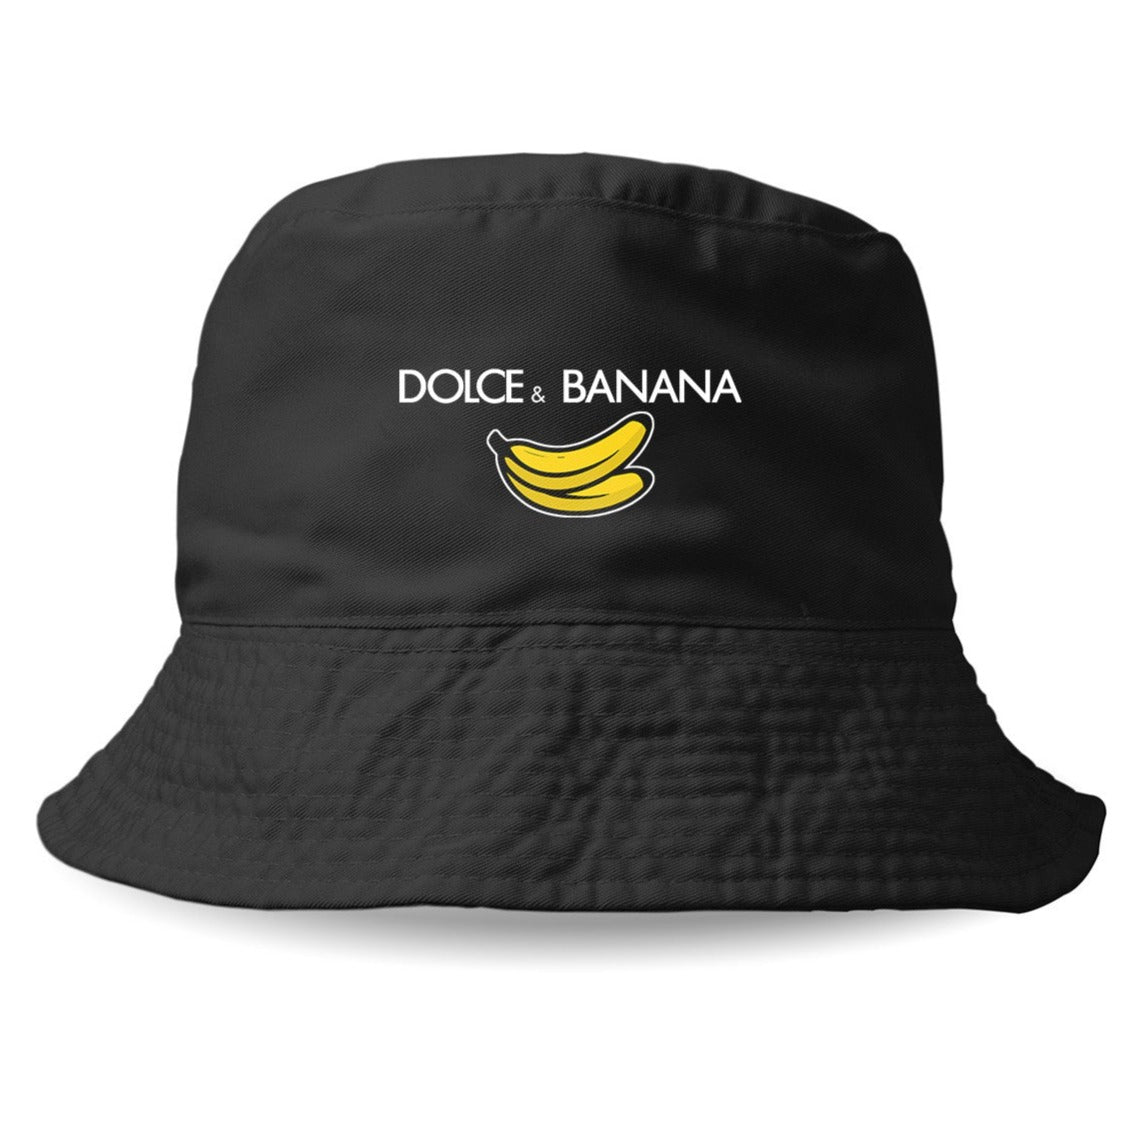 DOLCE & BANANA - Bucket Hat